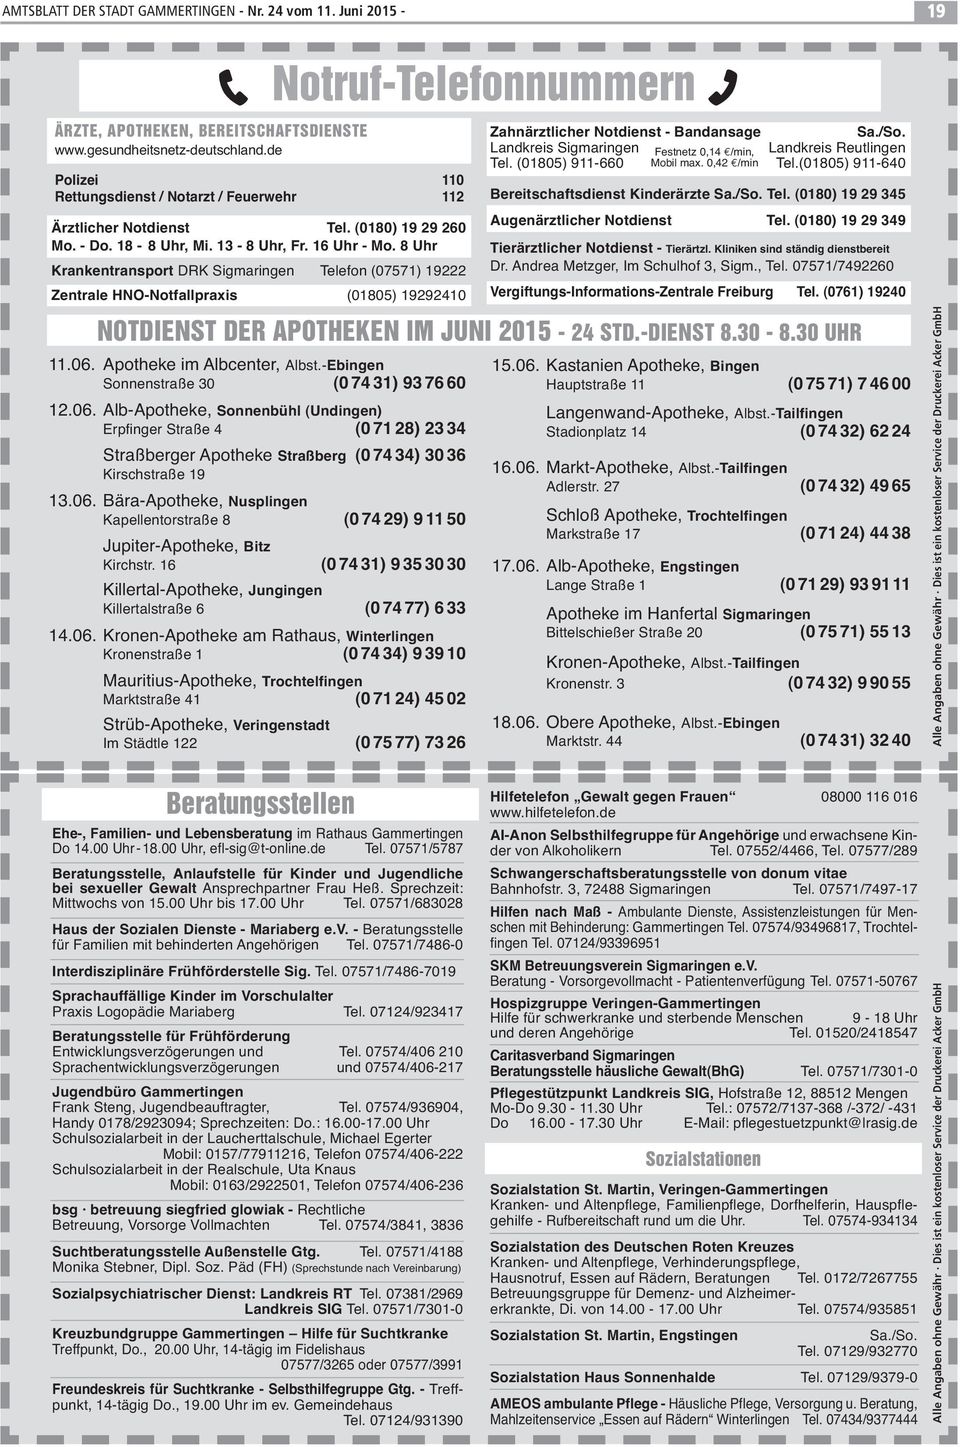 8 Uhr Krankentransport DRK Sigmaringen Telefon (07571) 19222 Zentrale HNO-Notfallpraxis (01805) 19292410 11.06.